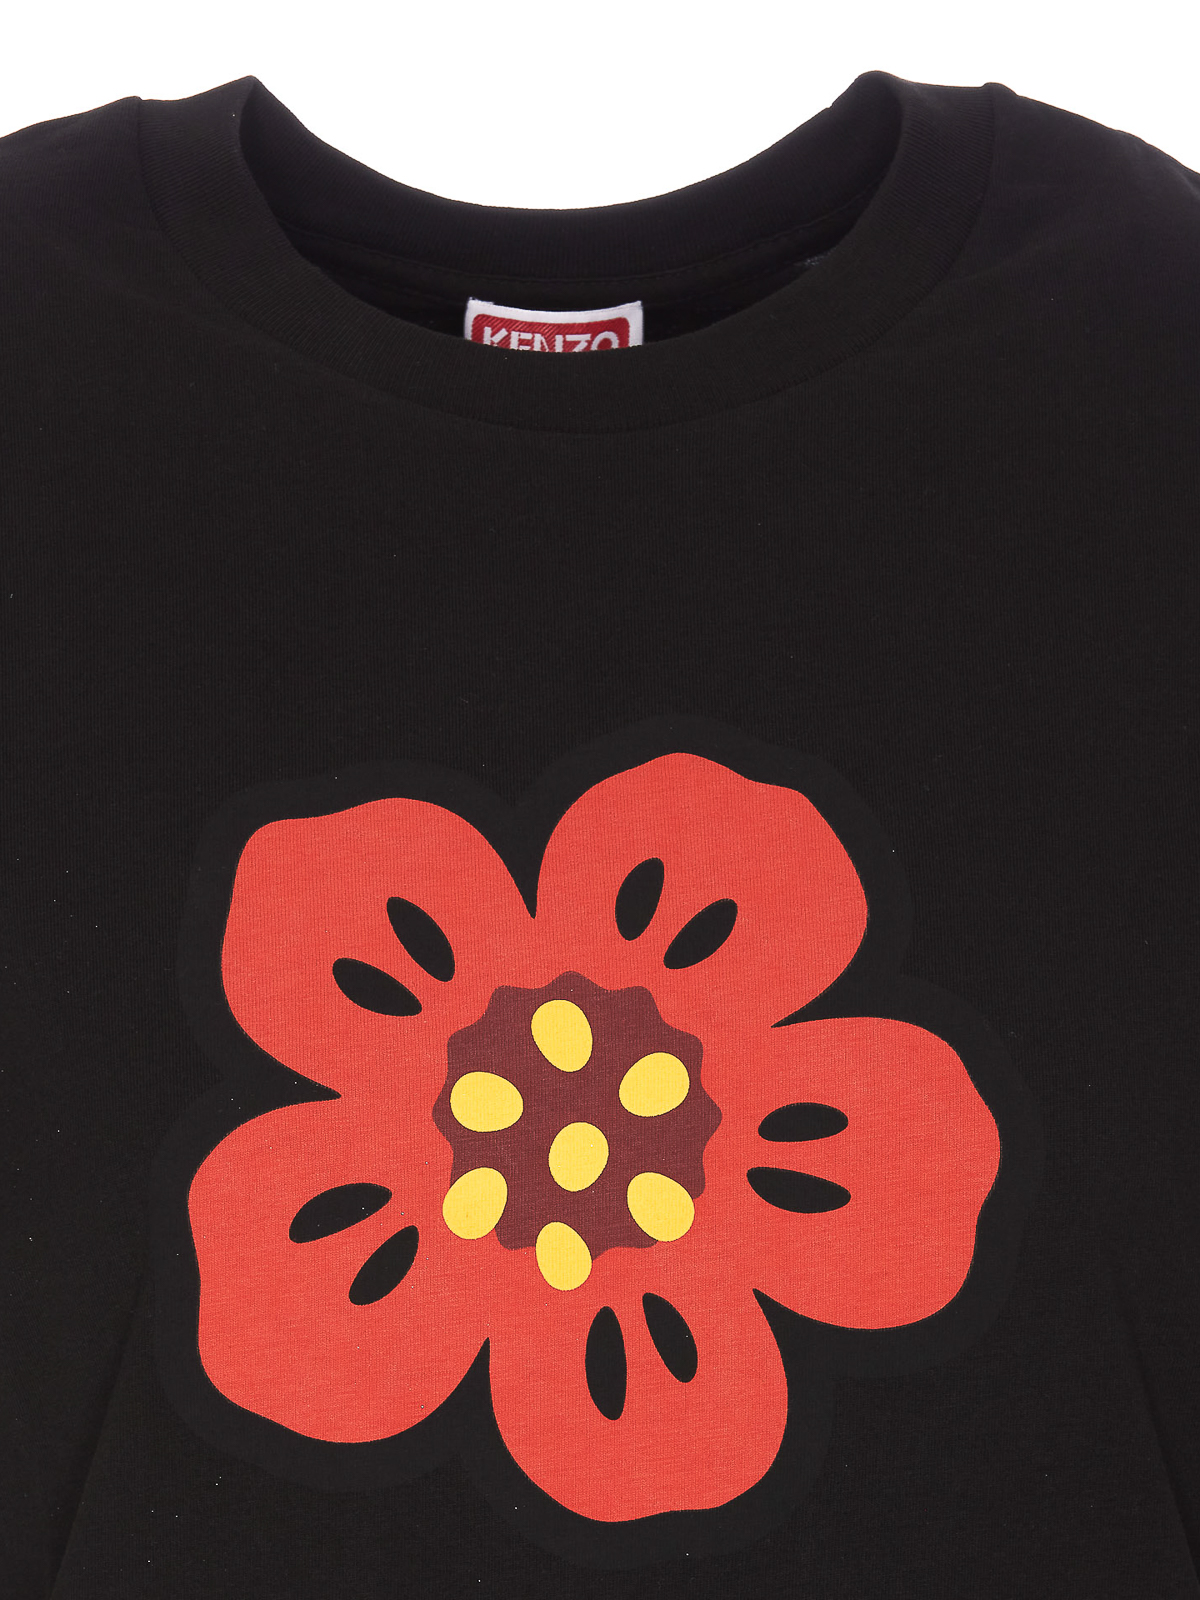 Kenzo Boke Flower Black T-Shirt